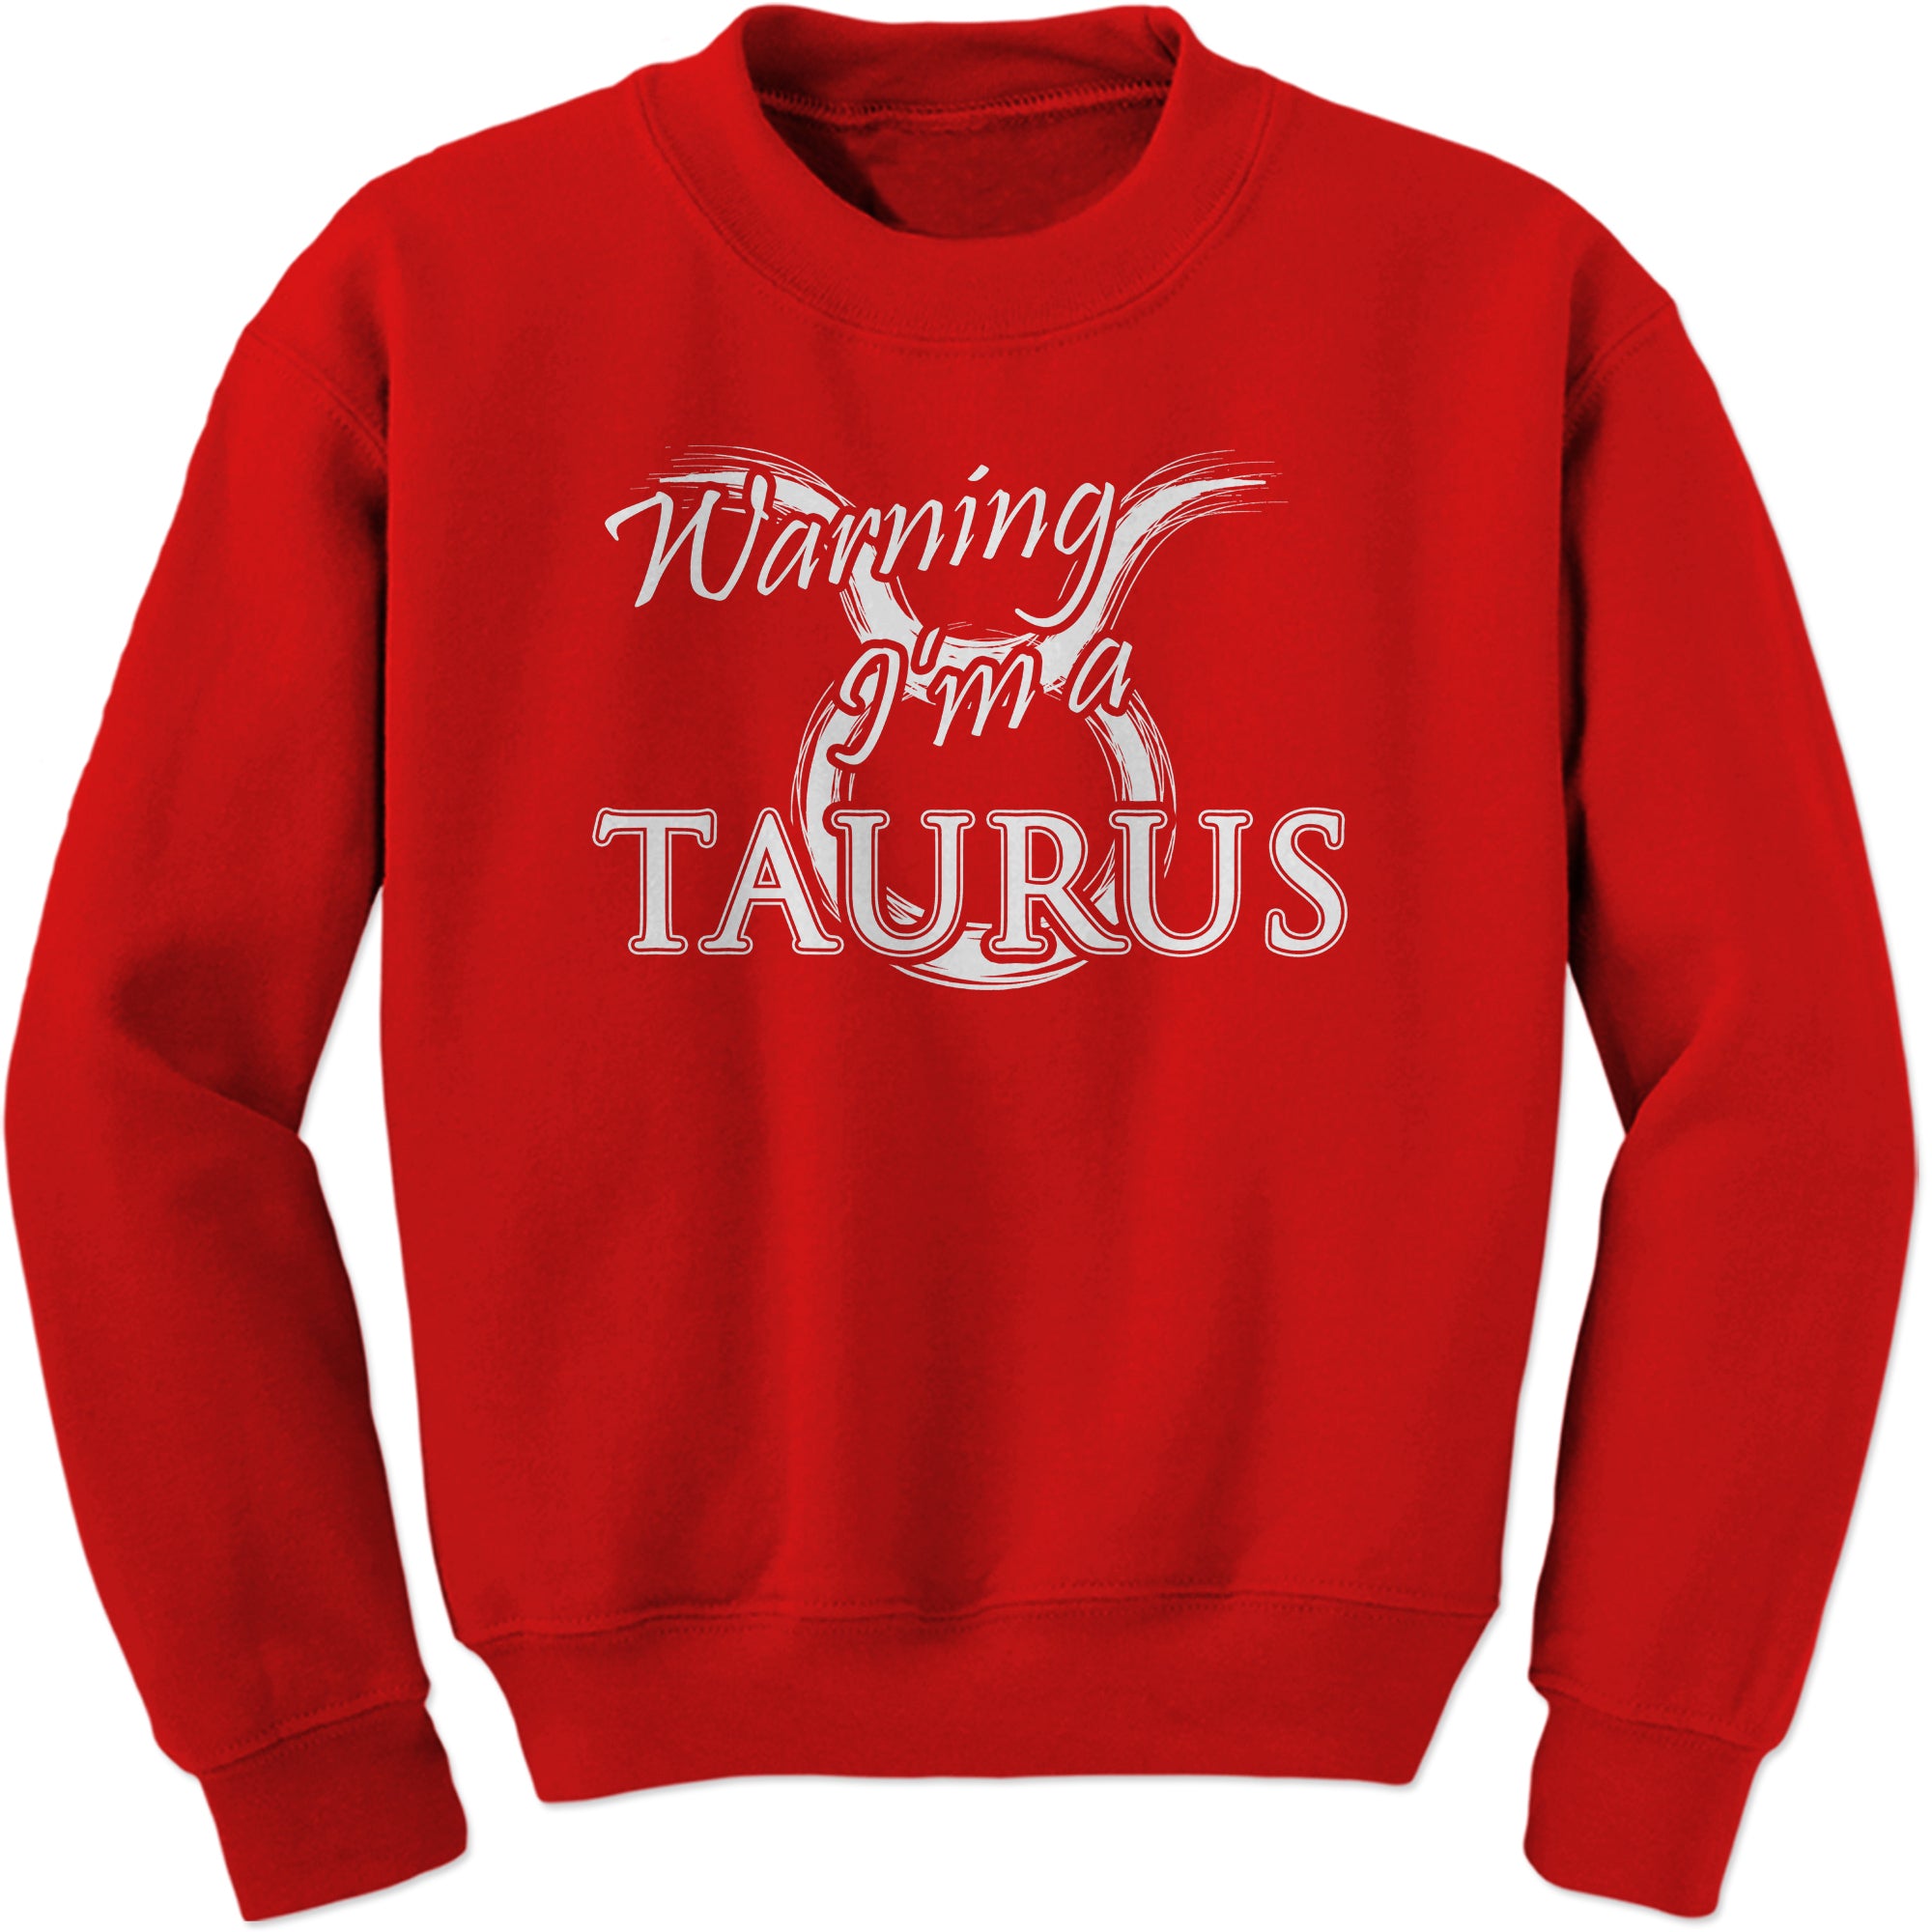 Taurus Pride Astrology Zodiac Sign Sweatshirt